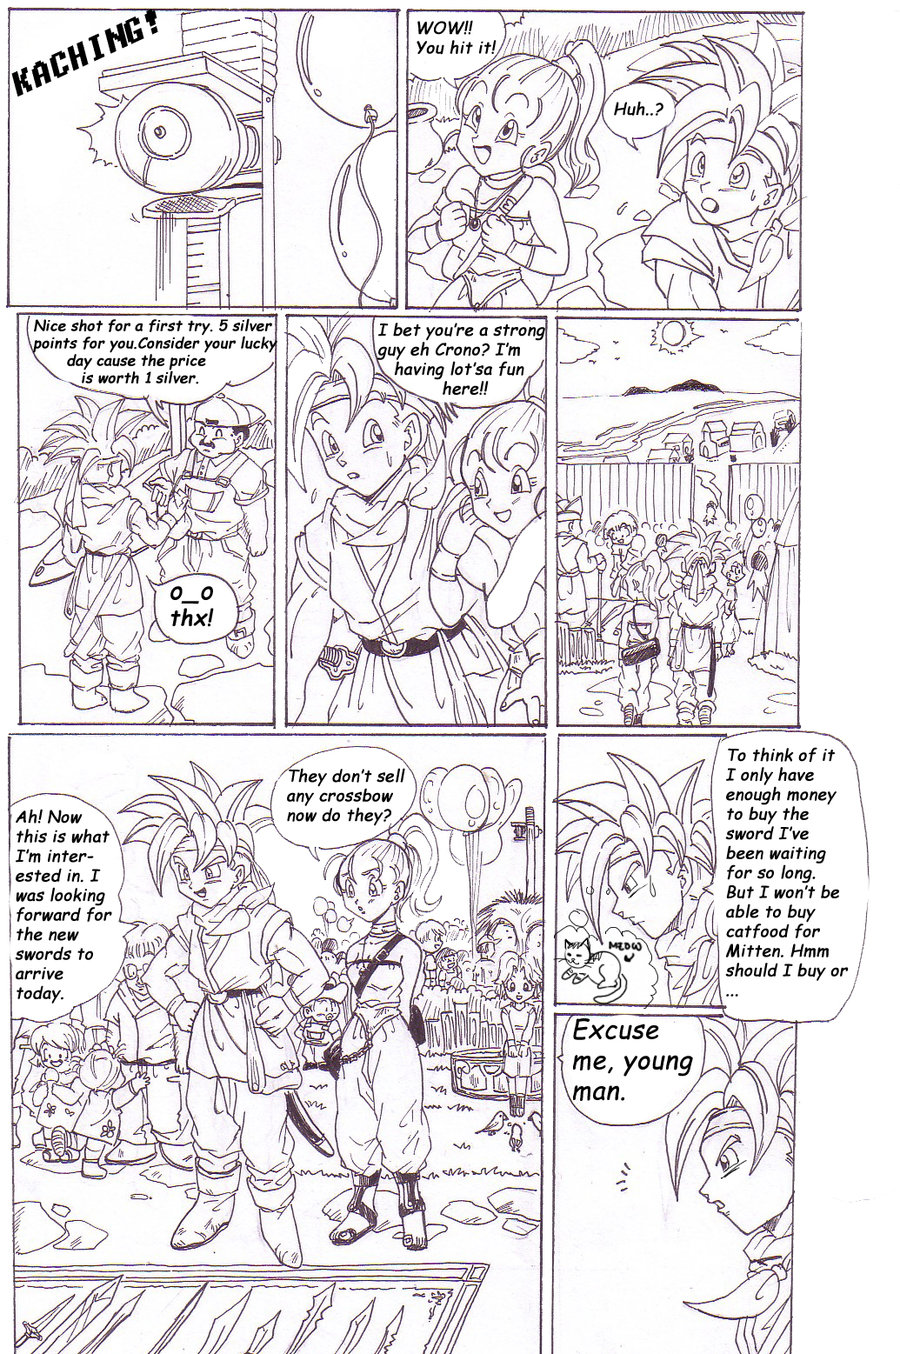 Chrono Trigger Manga by AmyGuardia F_18135366